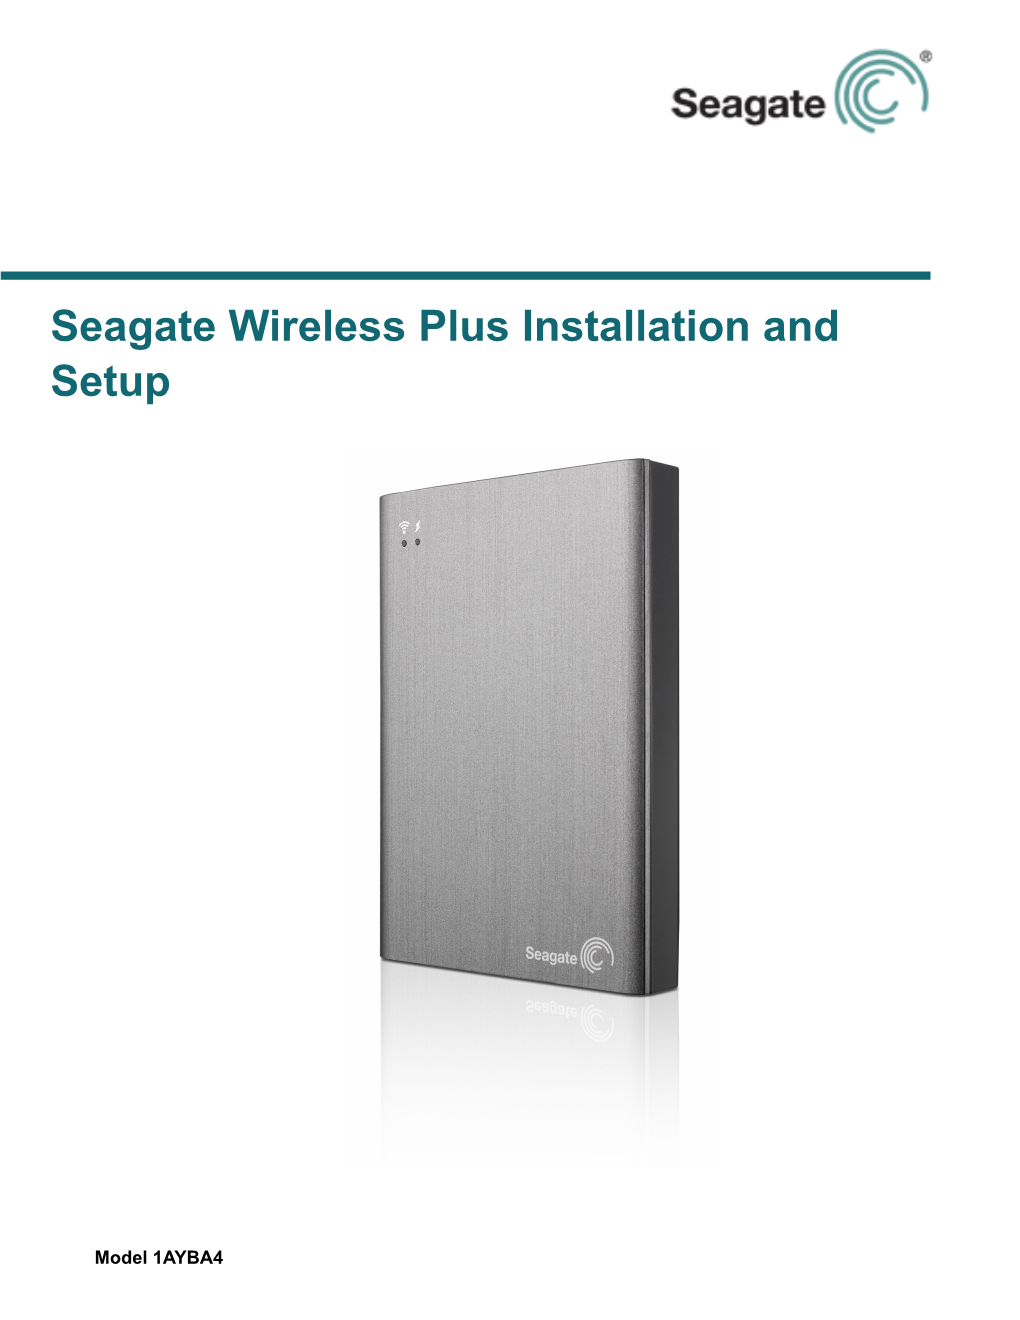 Seagate Wireless Plus Installation and Setup